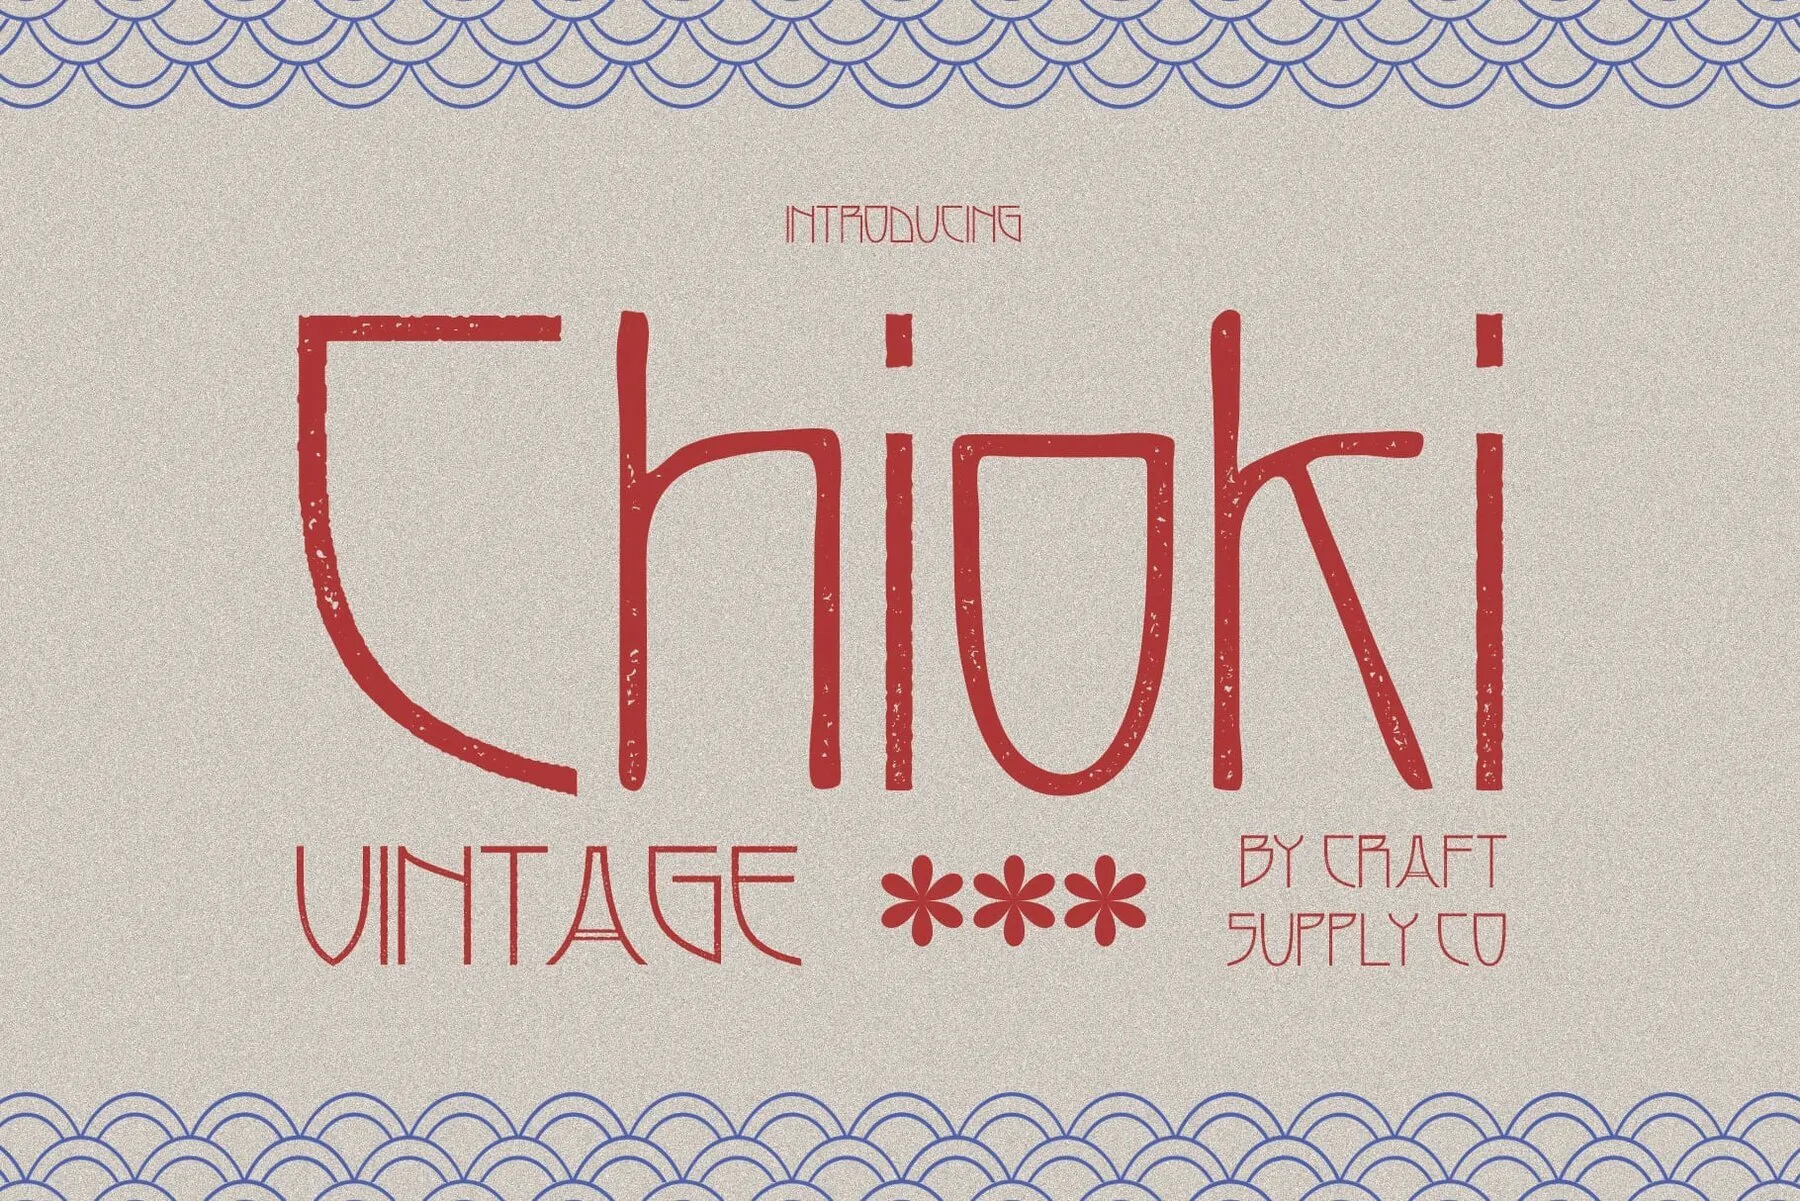 Chioki Vintage